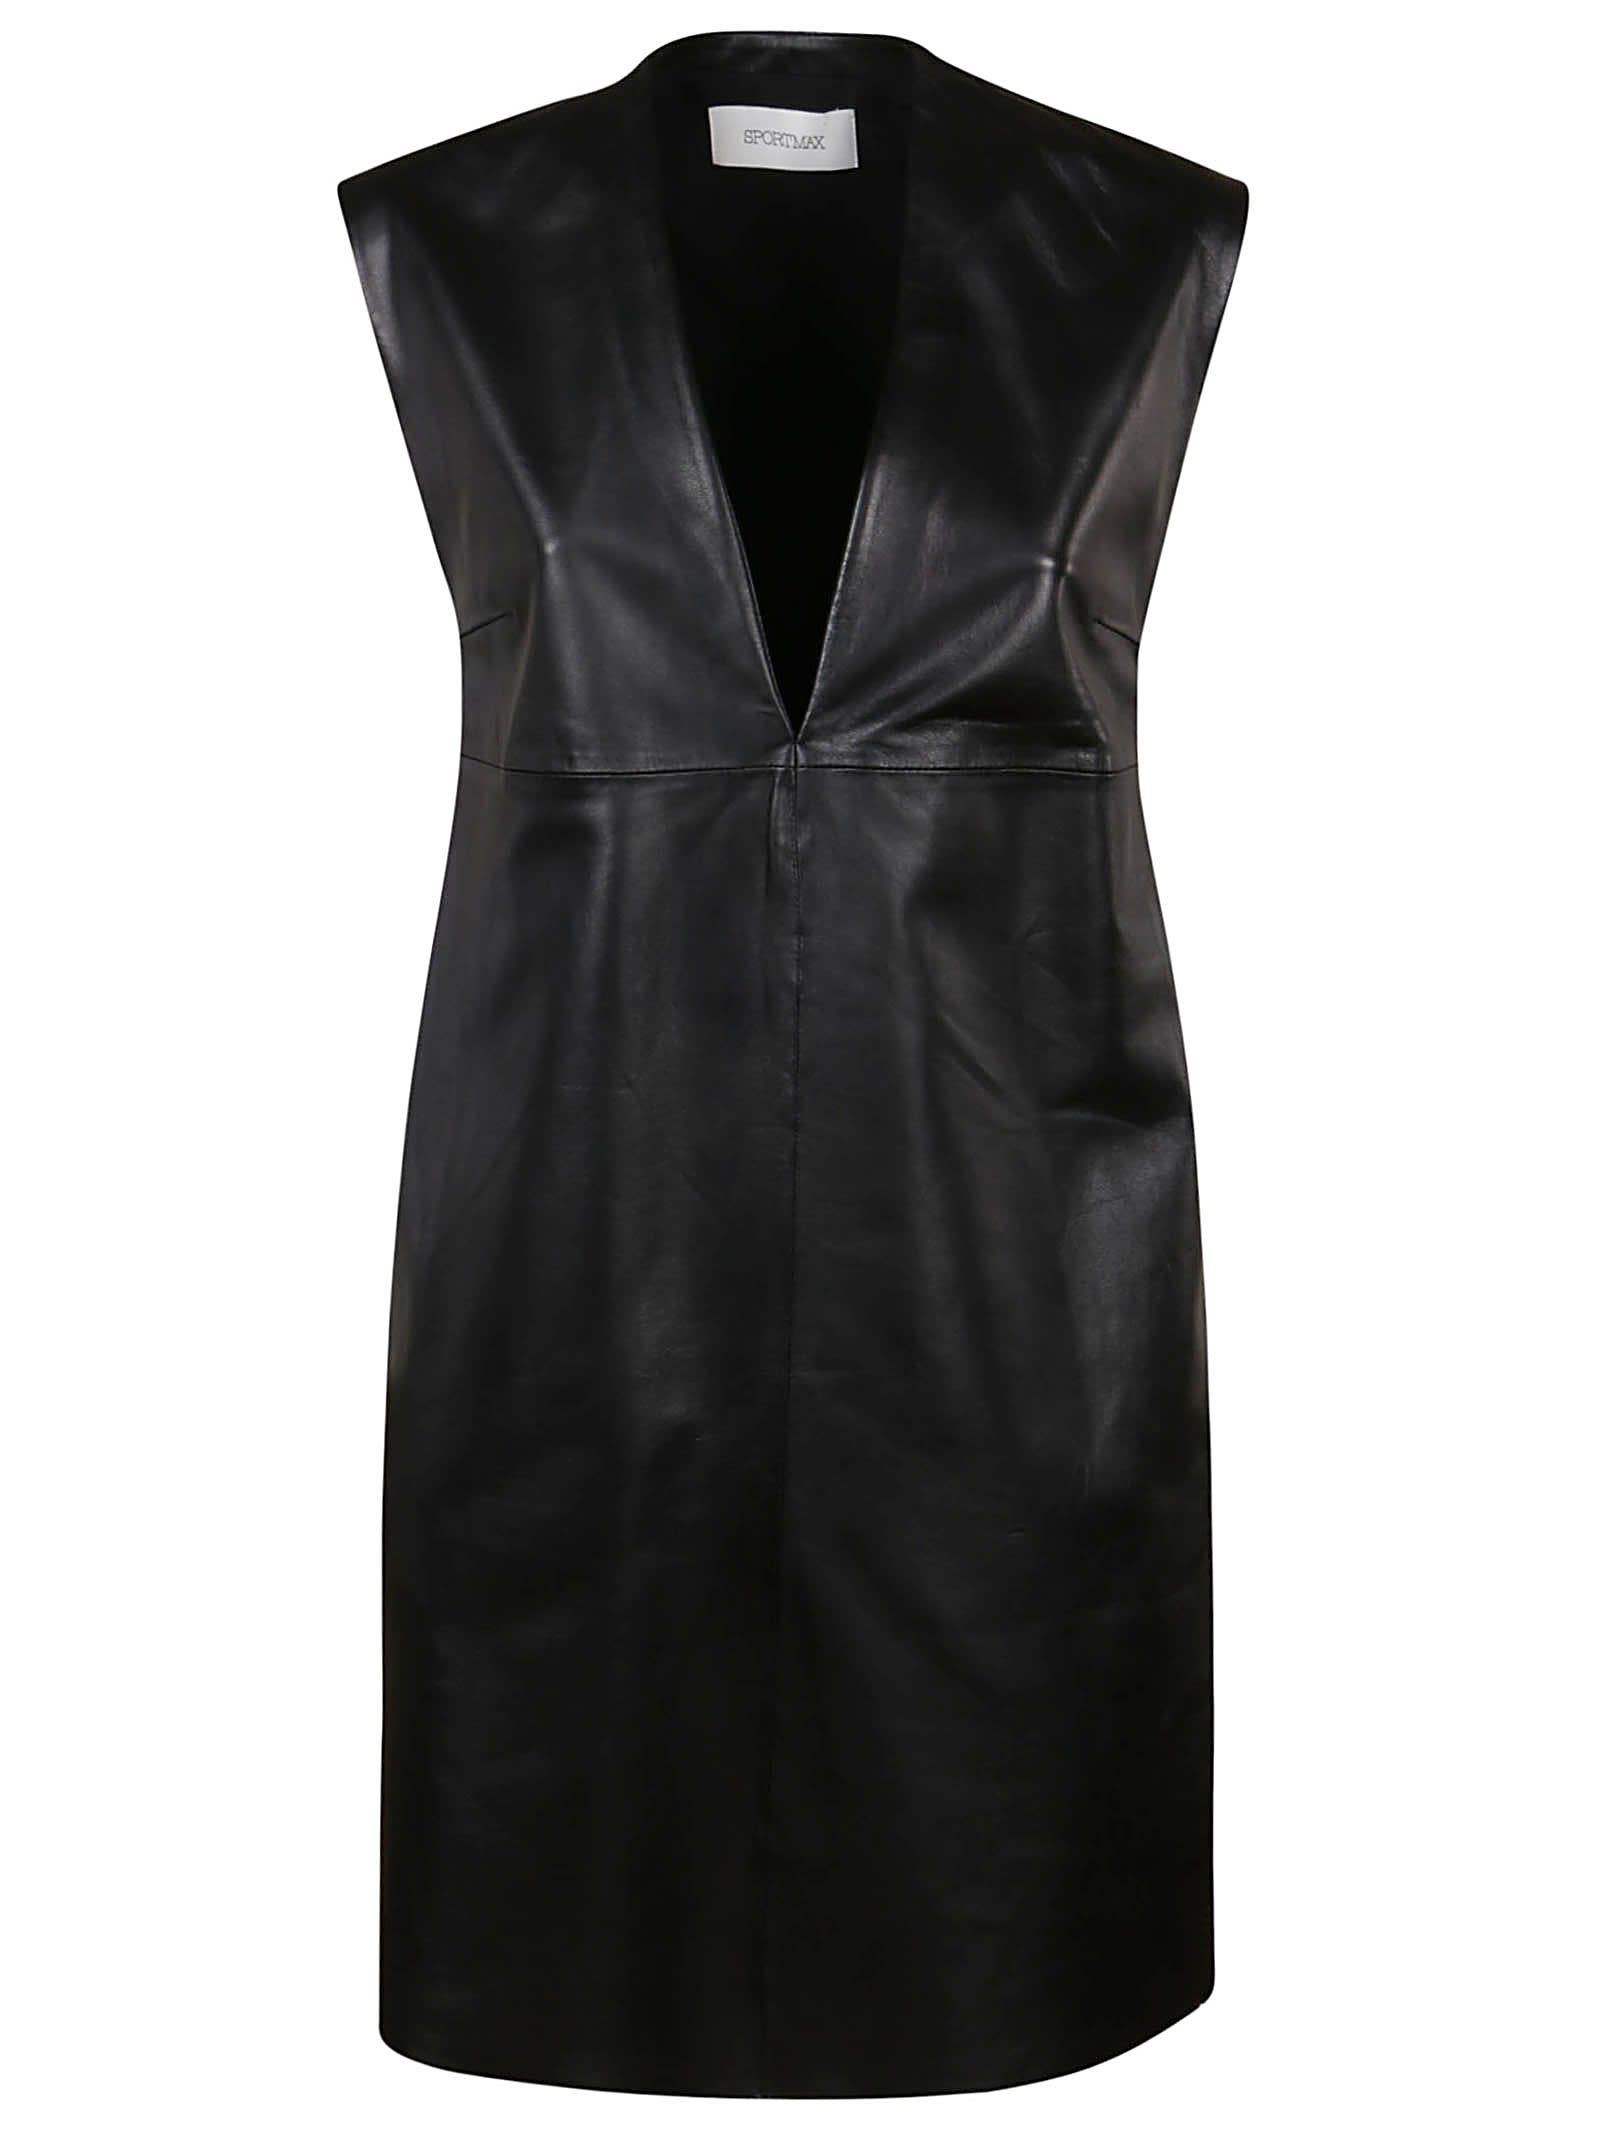 SportMax Black Leather Dress